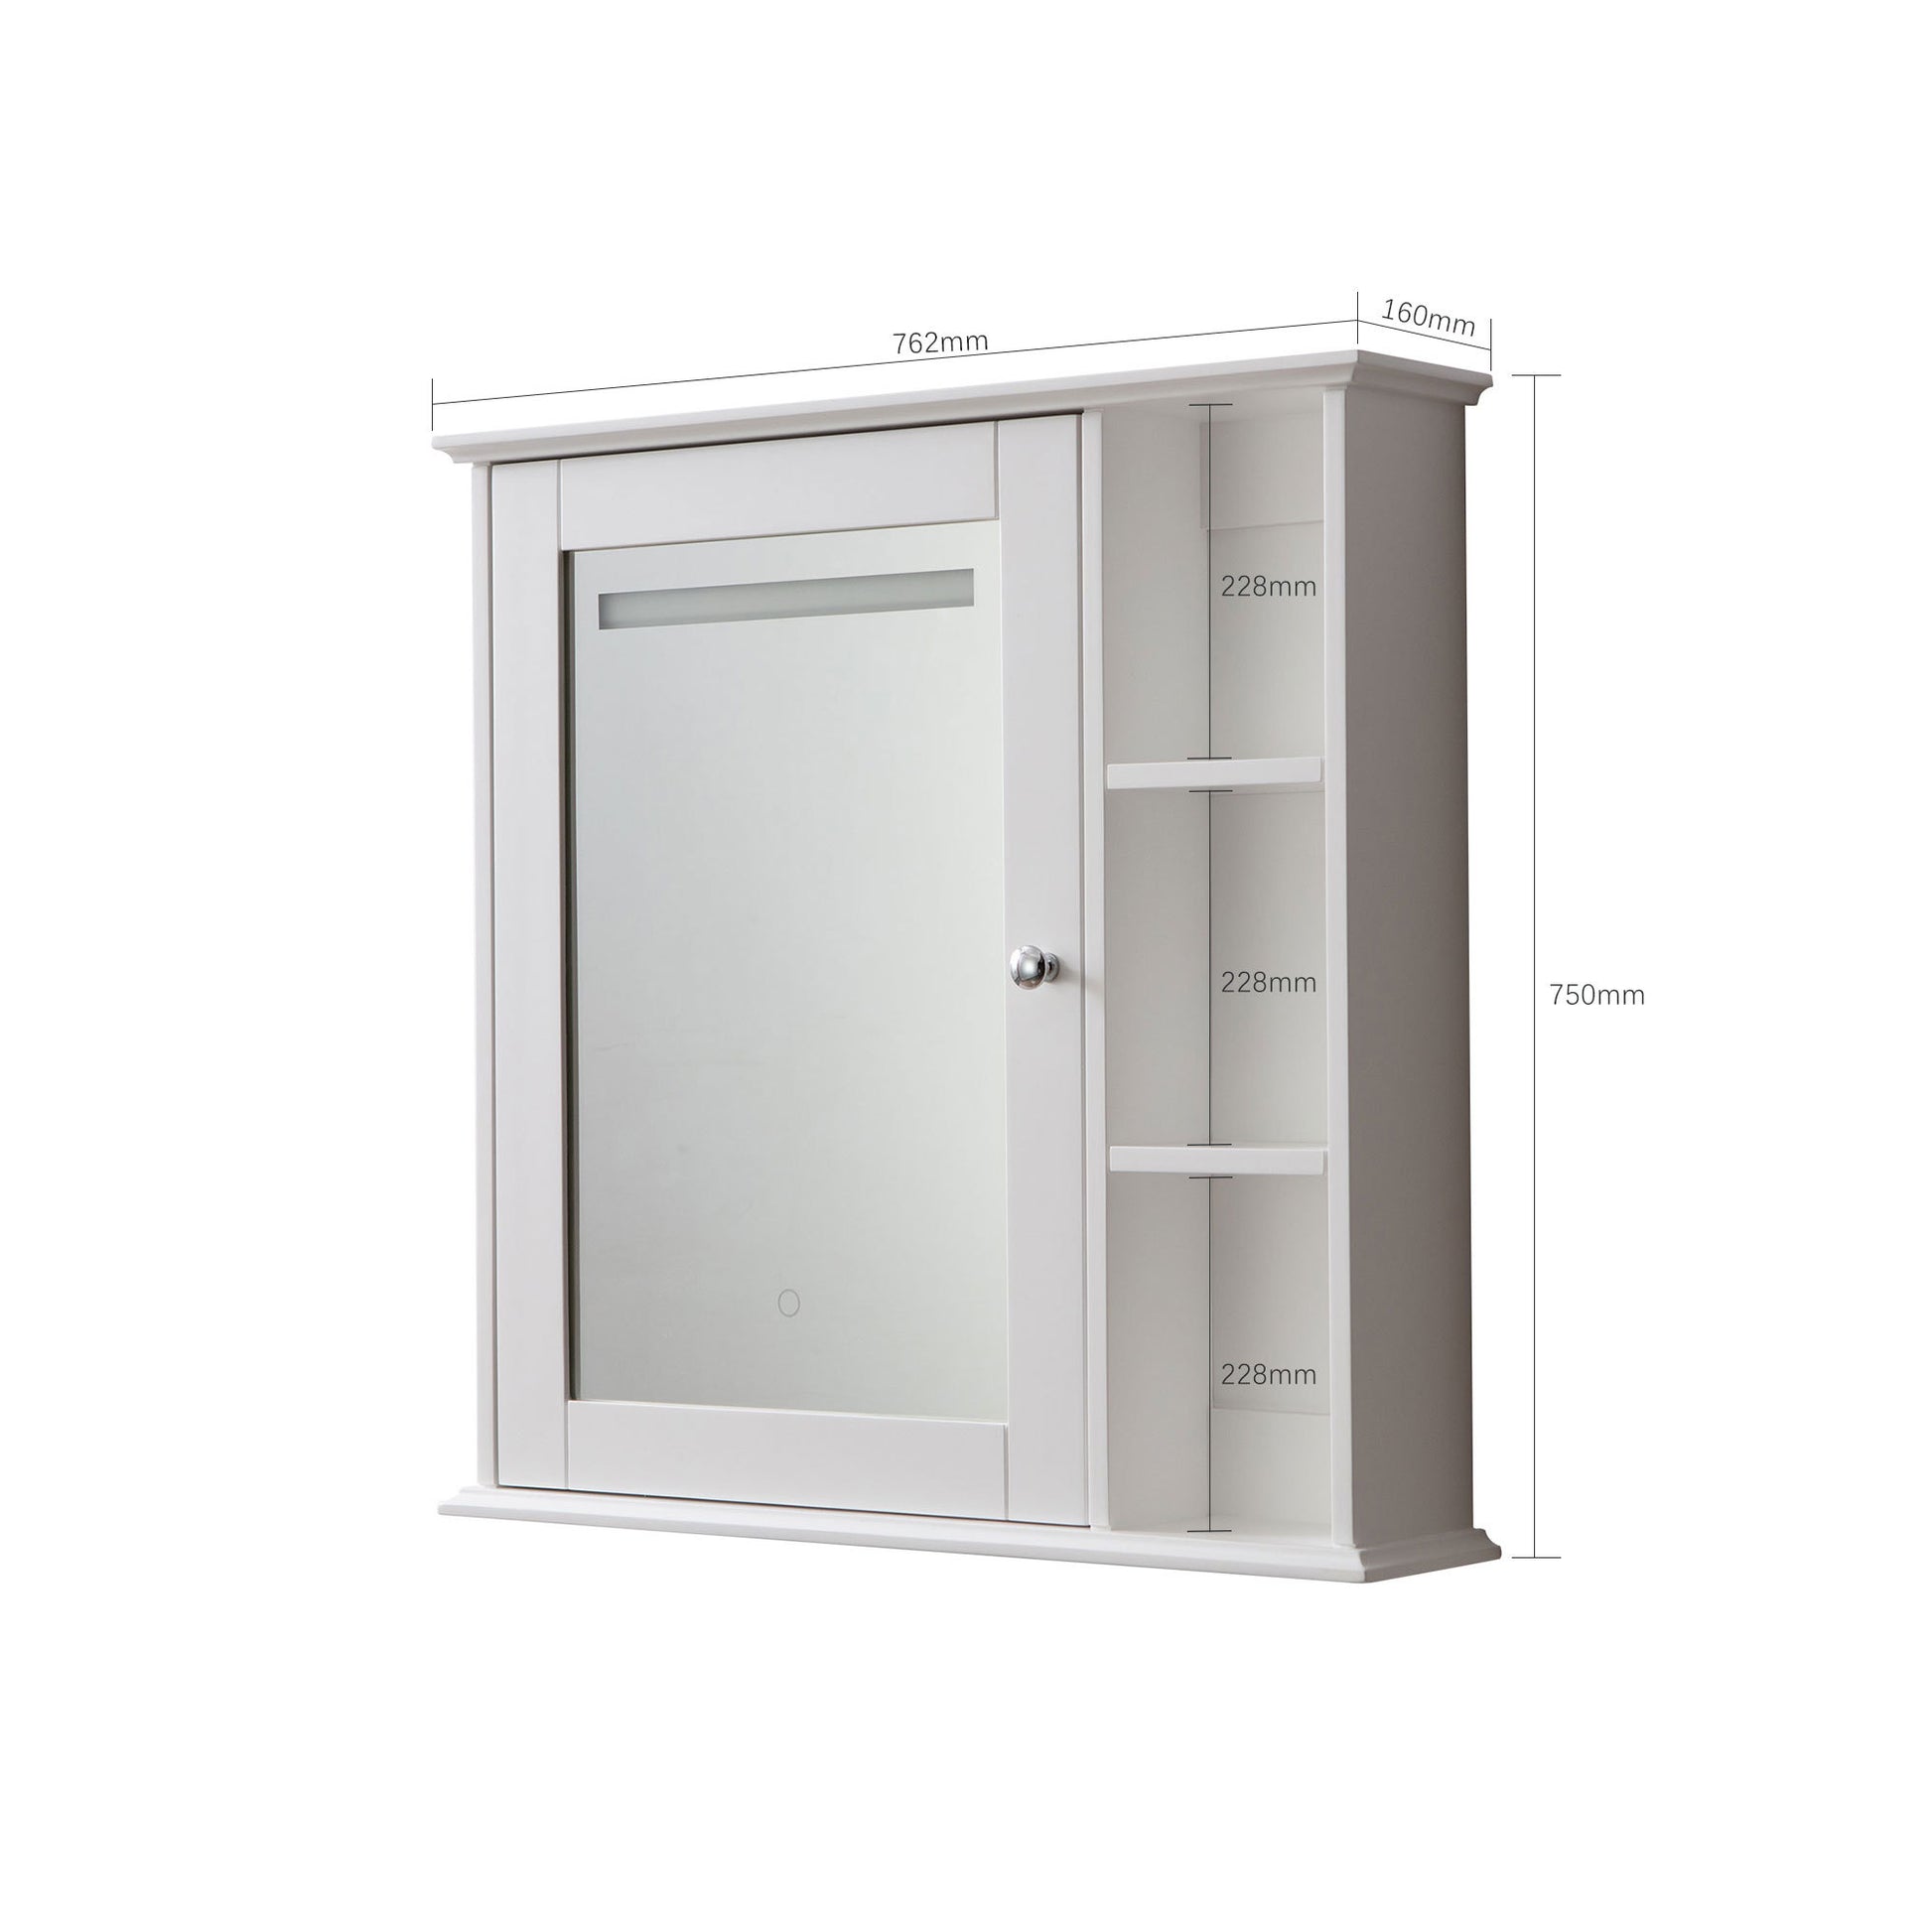 Bathroom Storage Mirror Cabinet Wall Mounted white-1-4-adjustable shelves-bathroom-wall